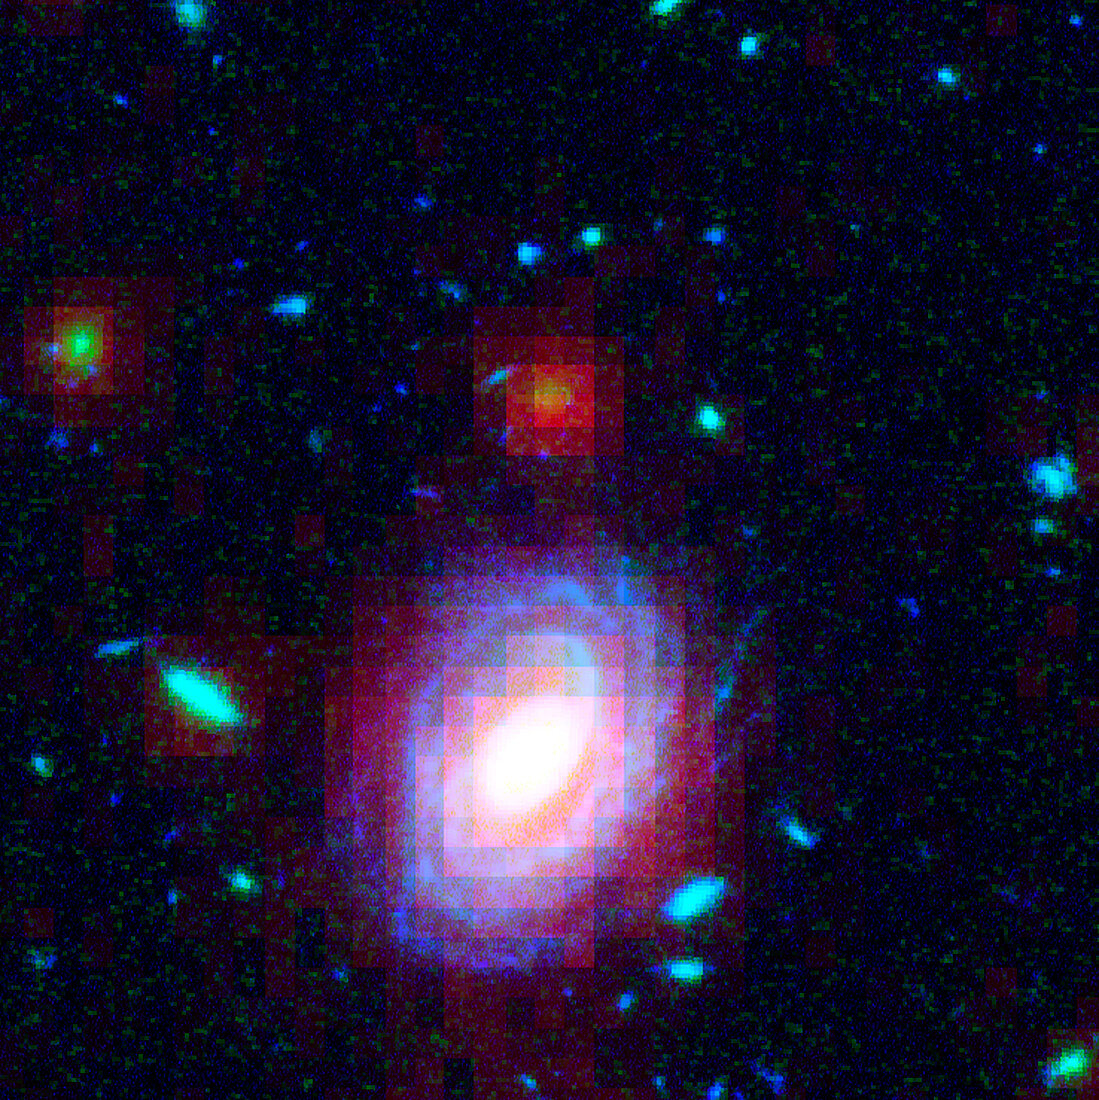 Distant galaxy HUDF-JD2,HST-SST image